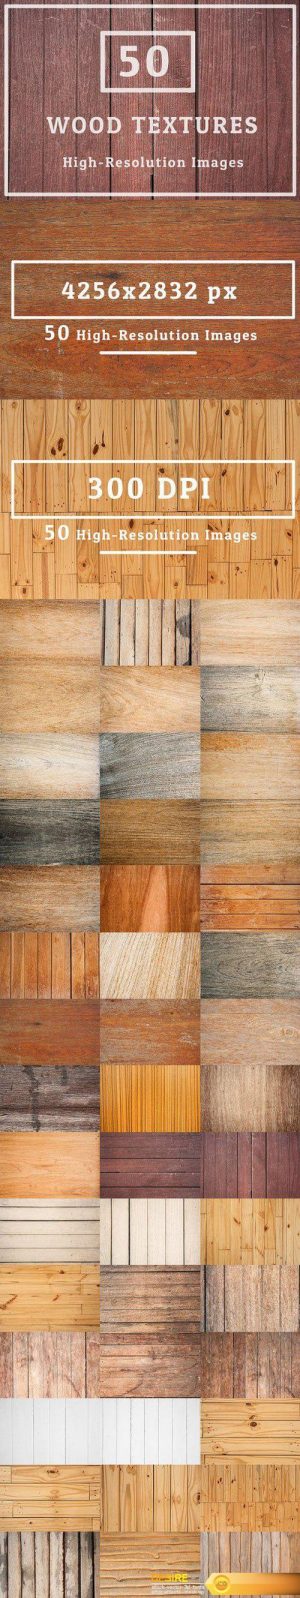 CM – 50 Wood Texture Background Set 07 623589